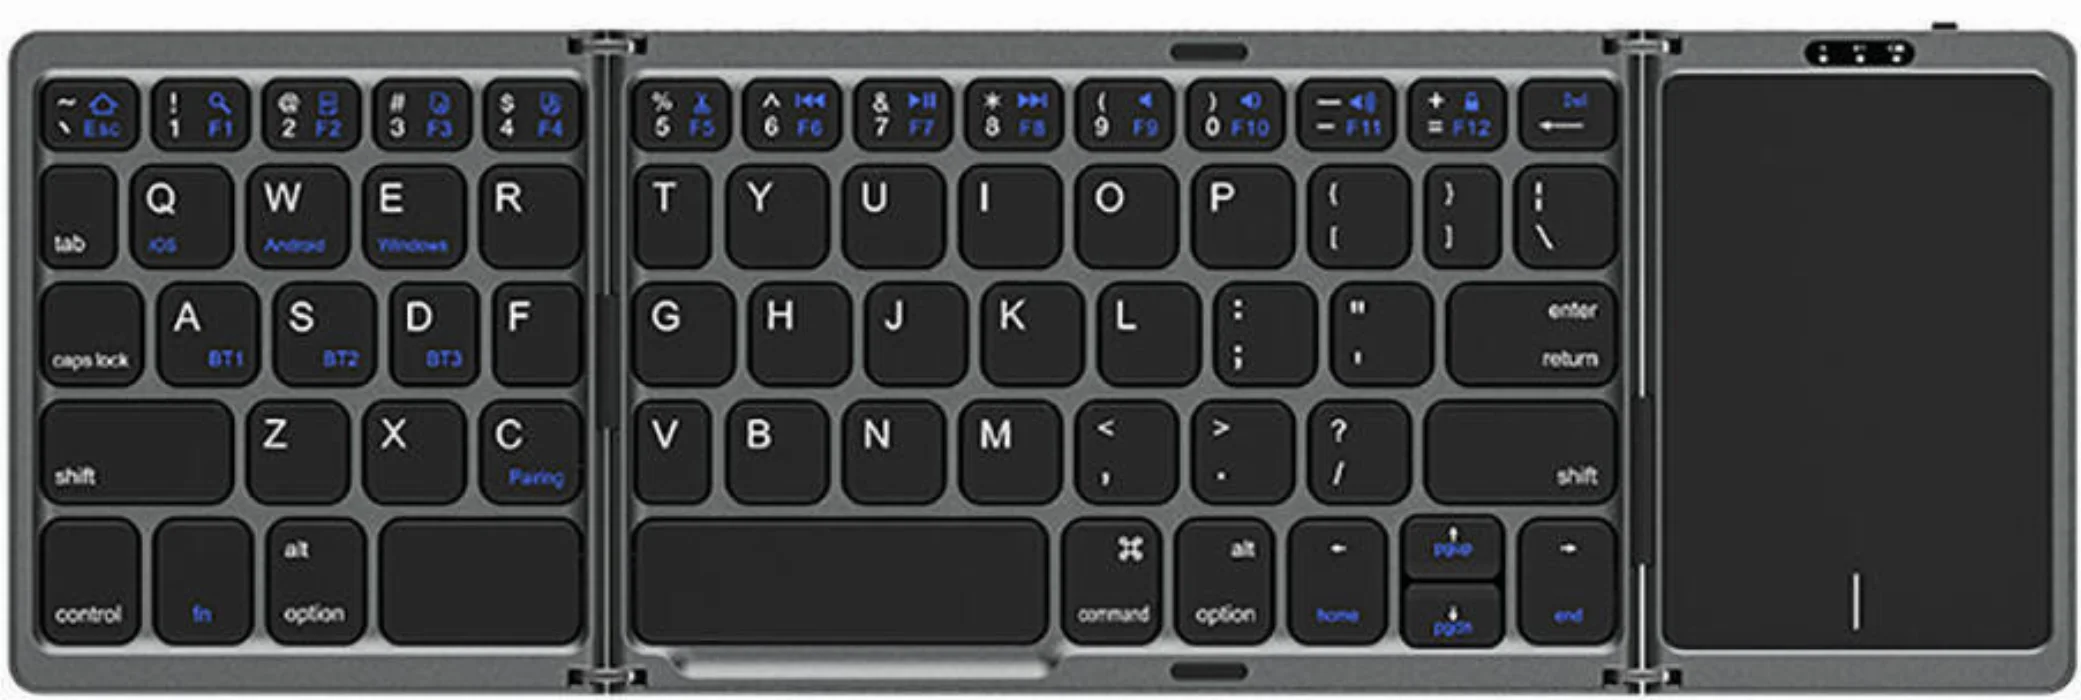 Recci RCS-K01 Katlanabilir Kablosuz Multifonksiyonel Touchpad Klavye - Gri